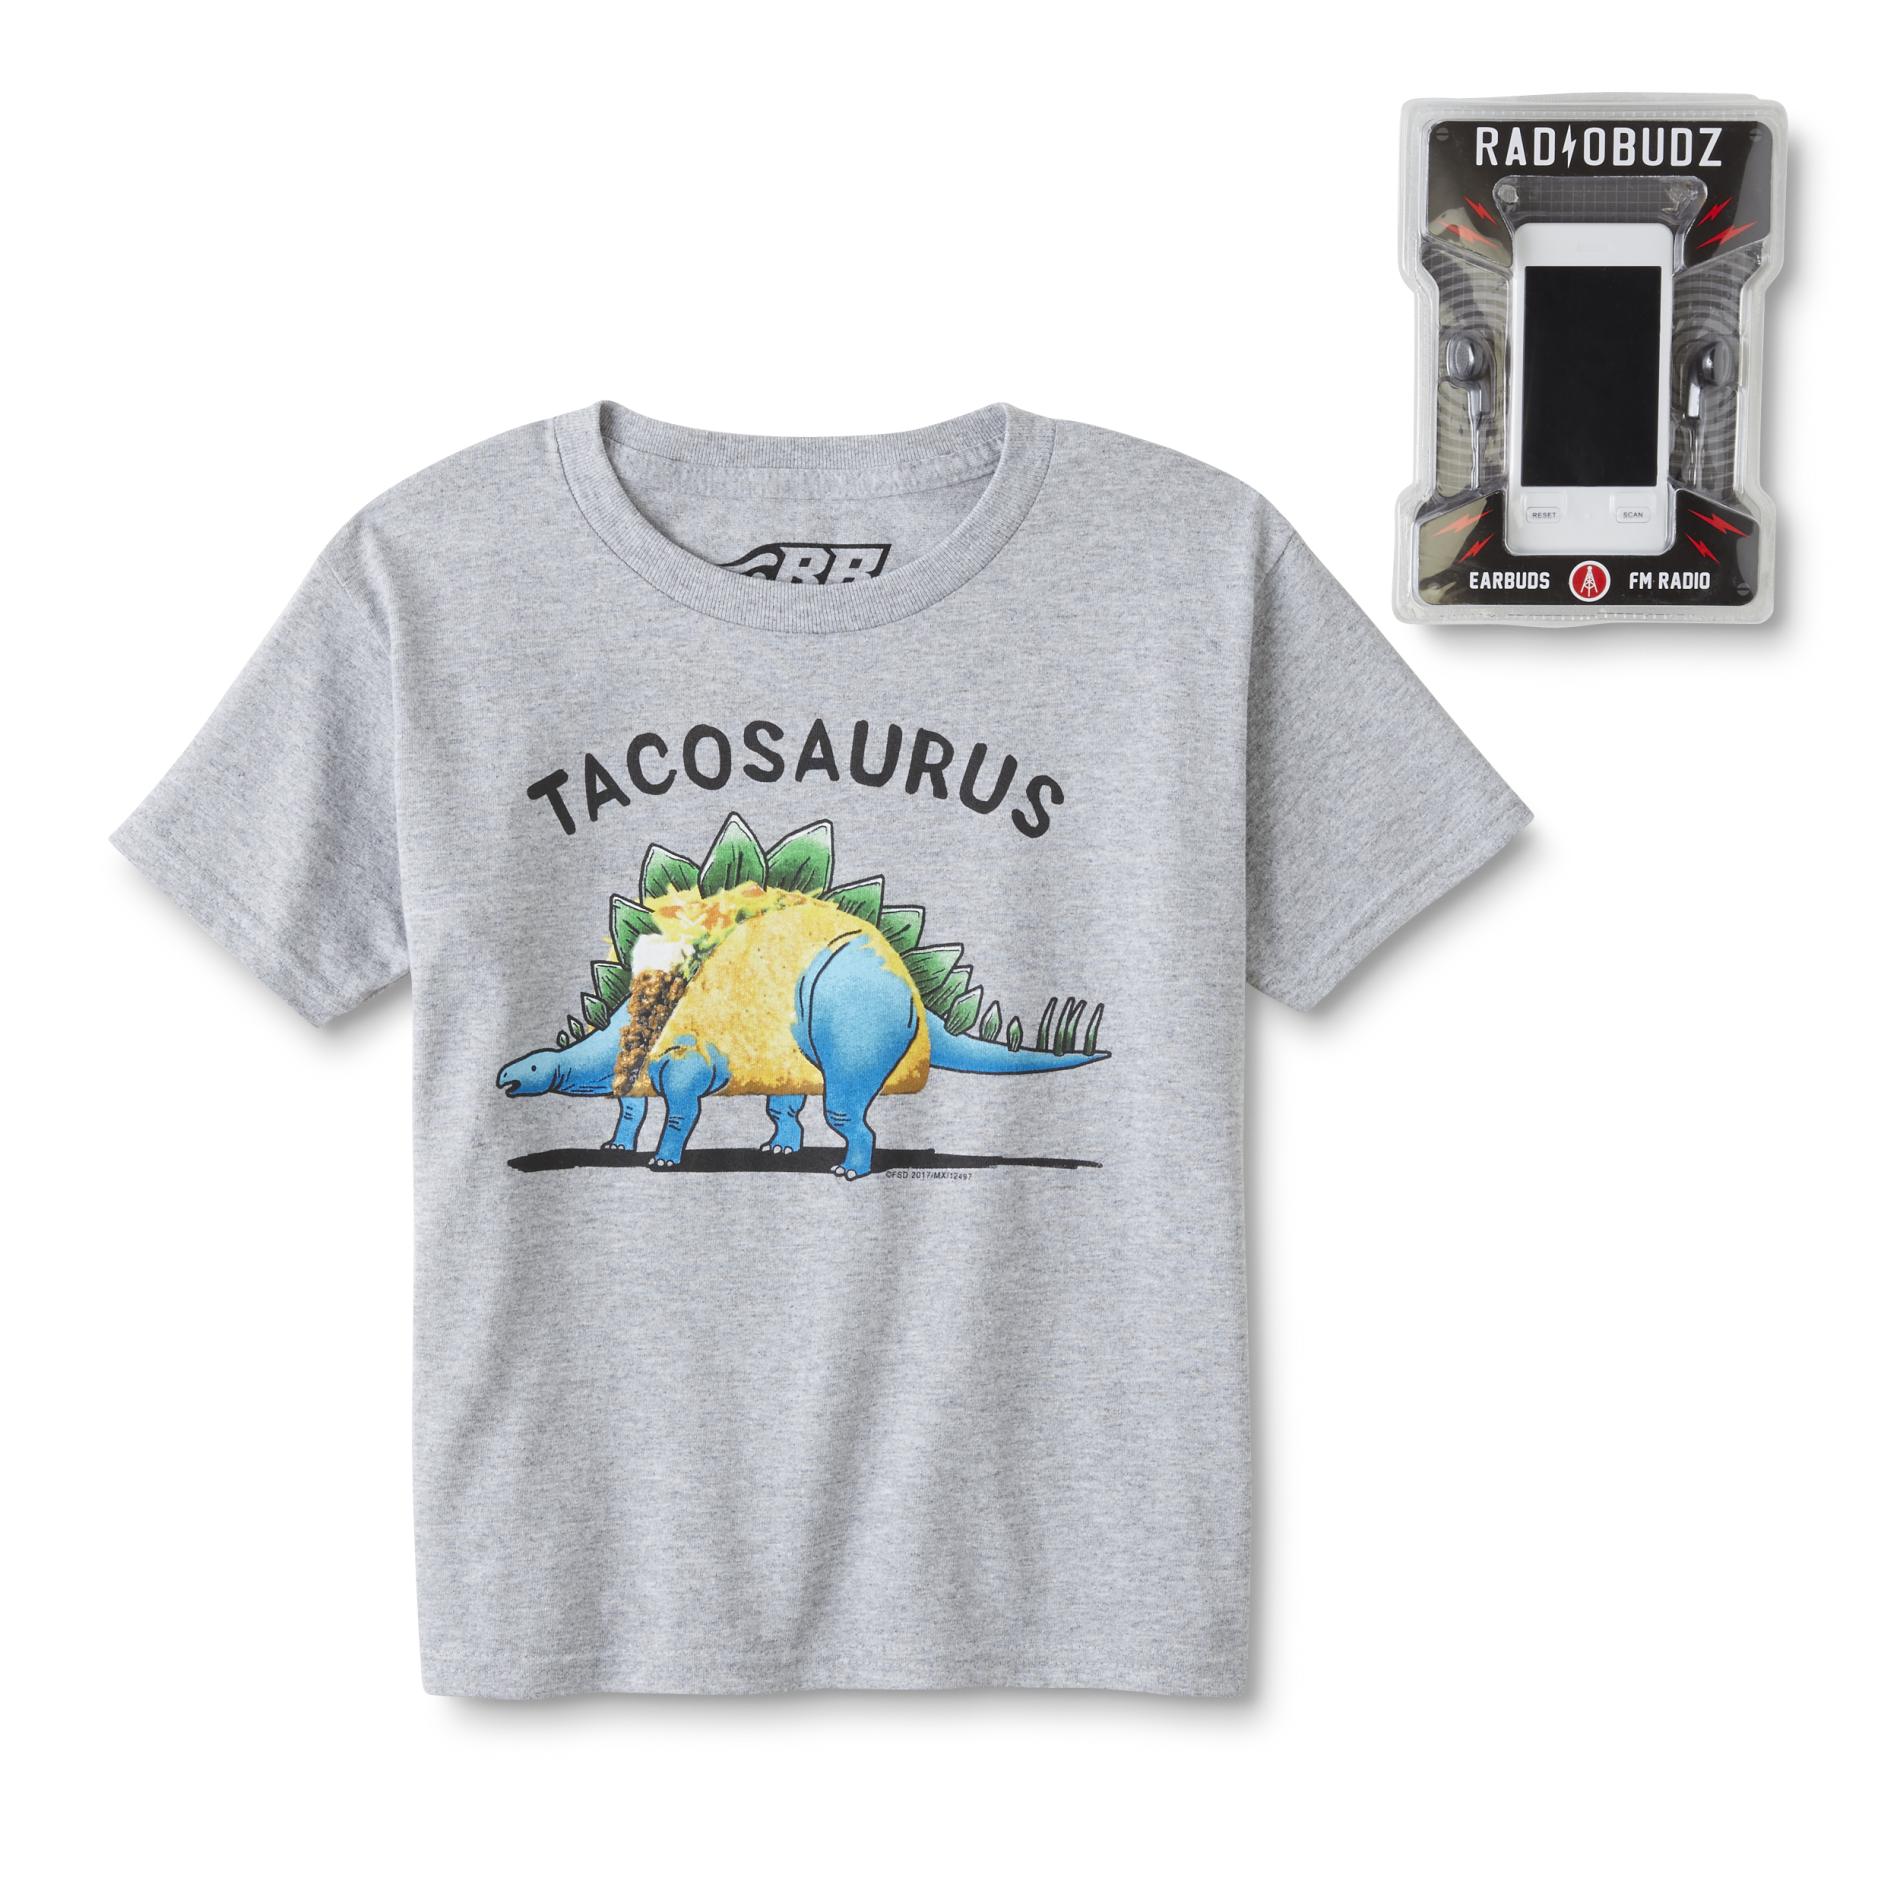 Rude Boyz Boys' Graphic T-Shirt, Radio & Earbuds - Tacosaurus